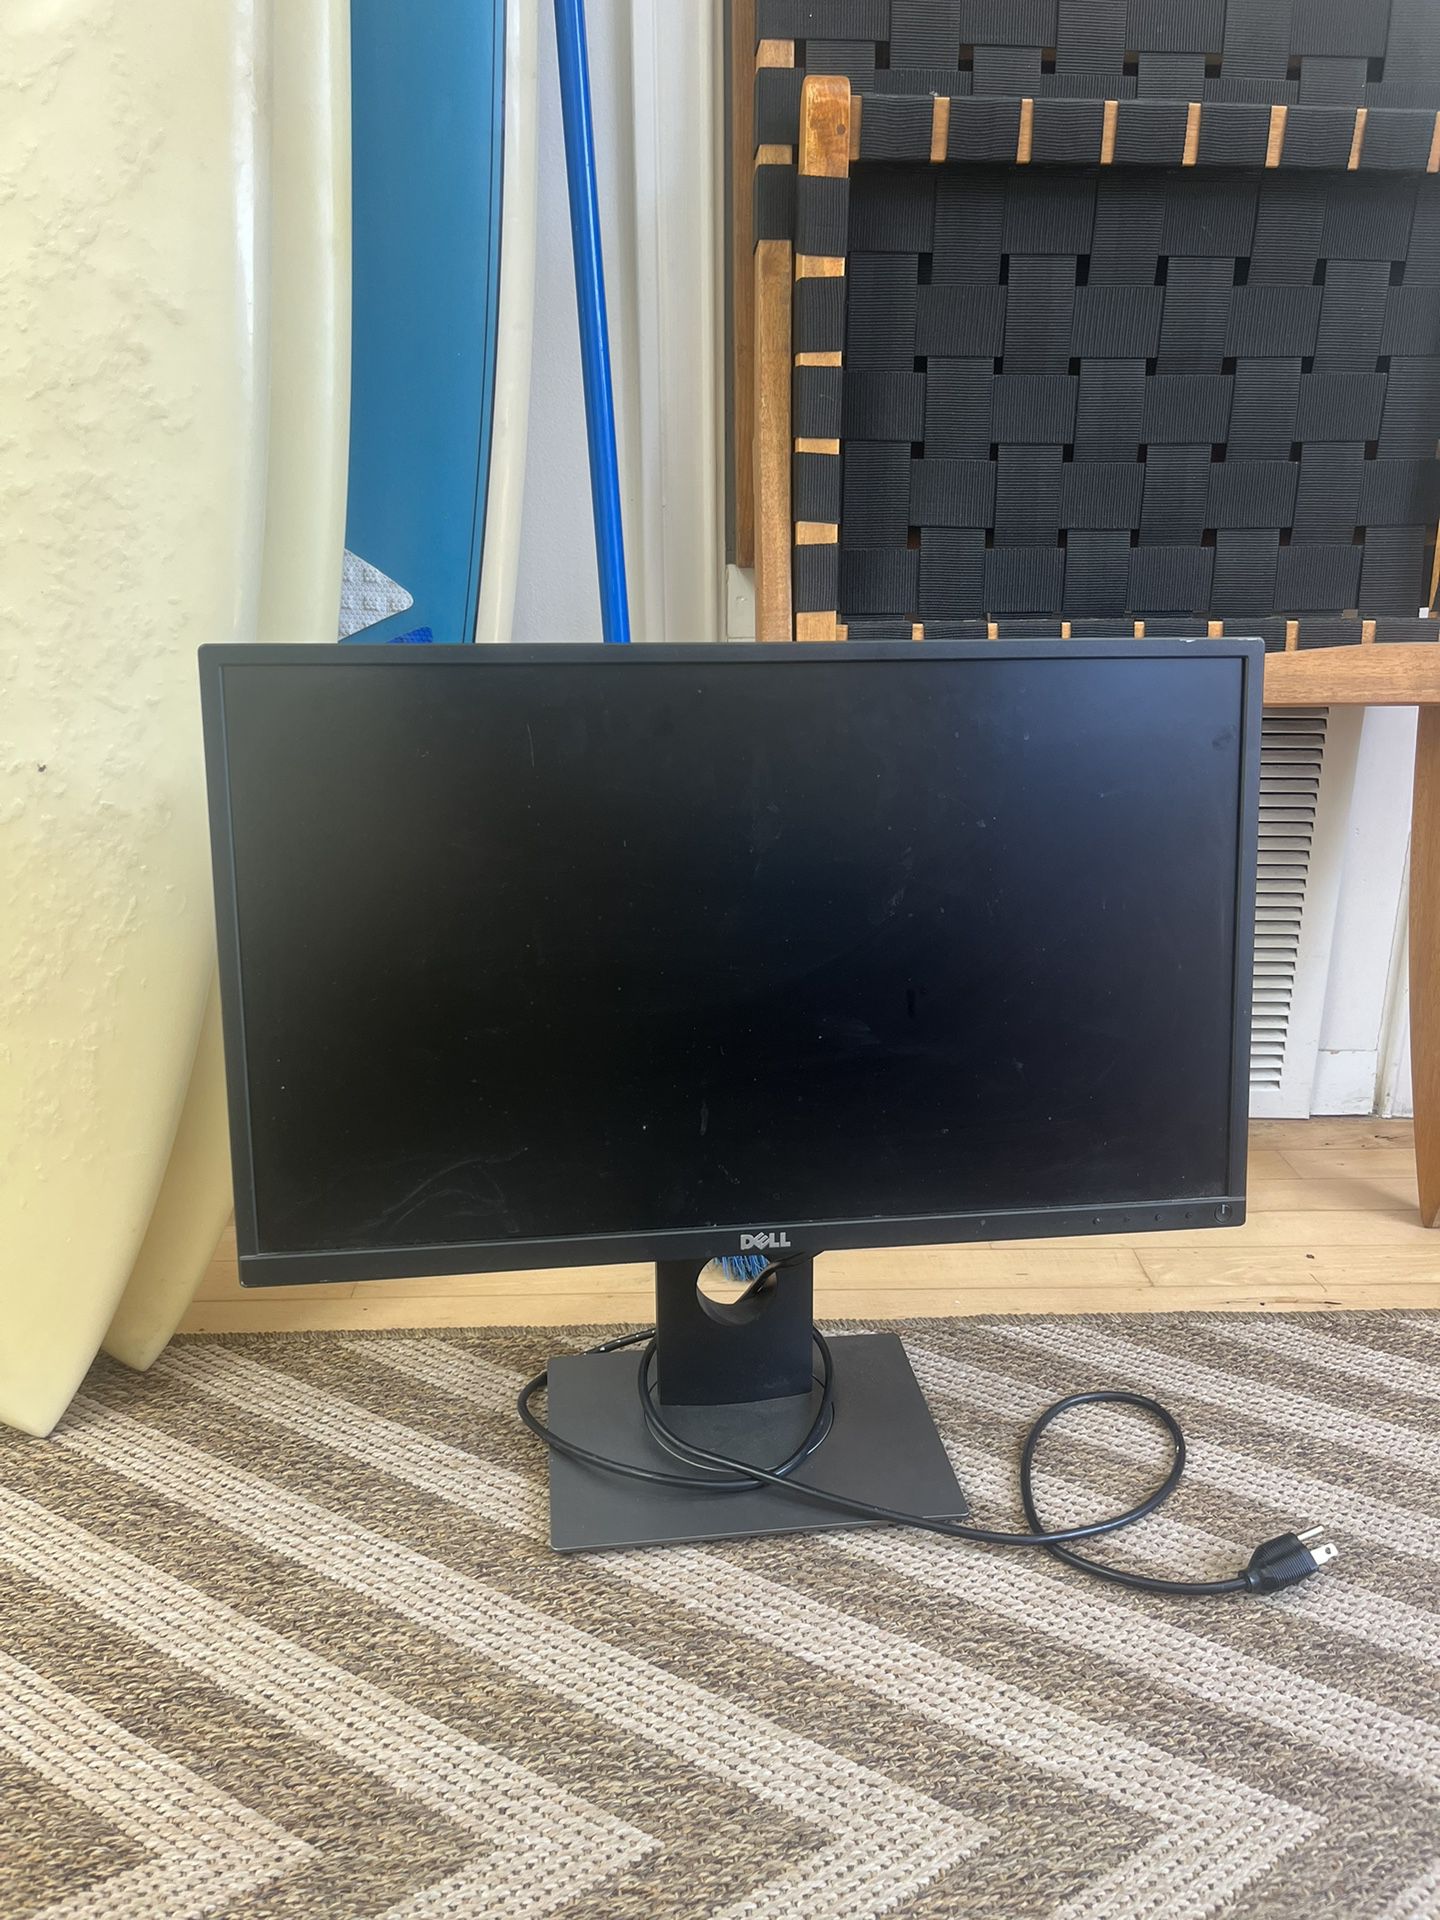 One (1) Dell Computer Monitor